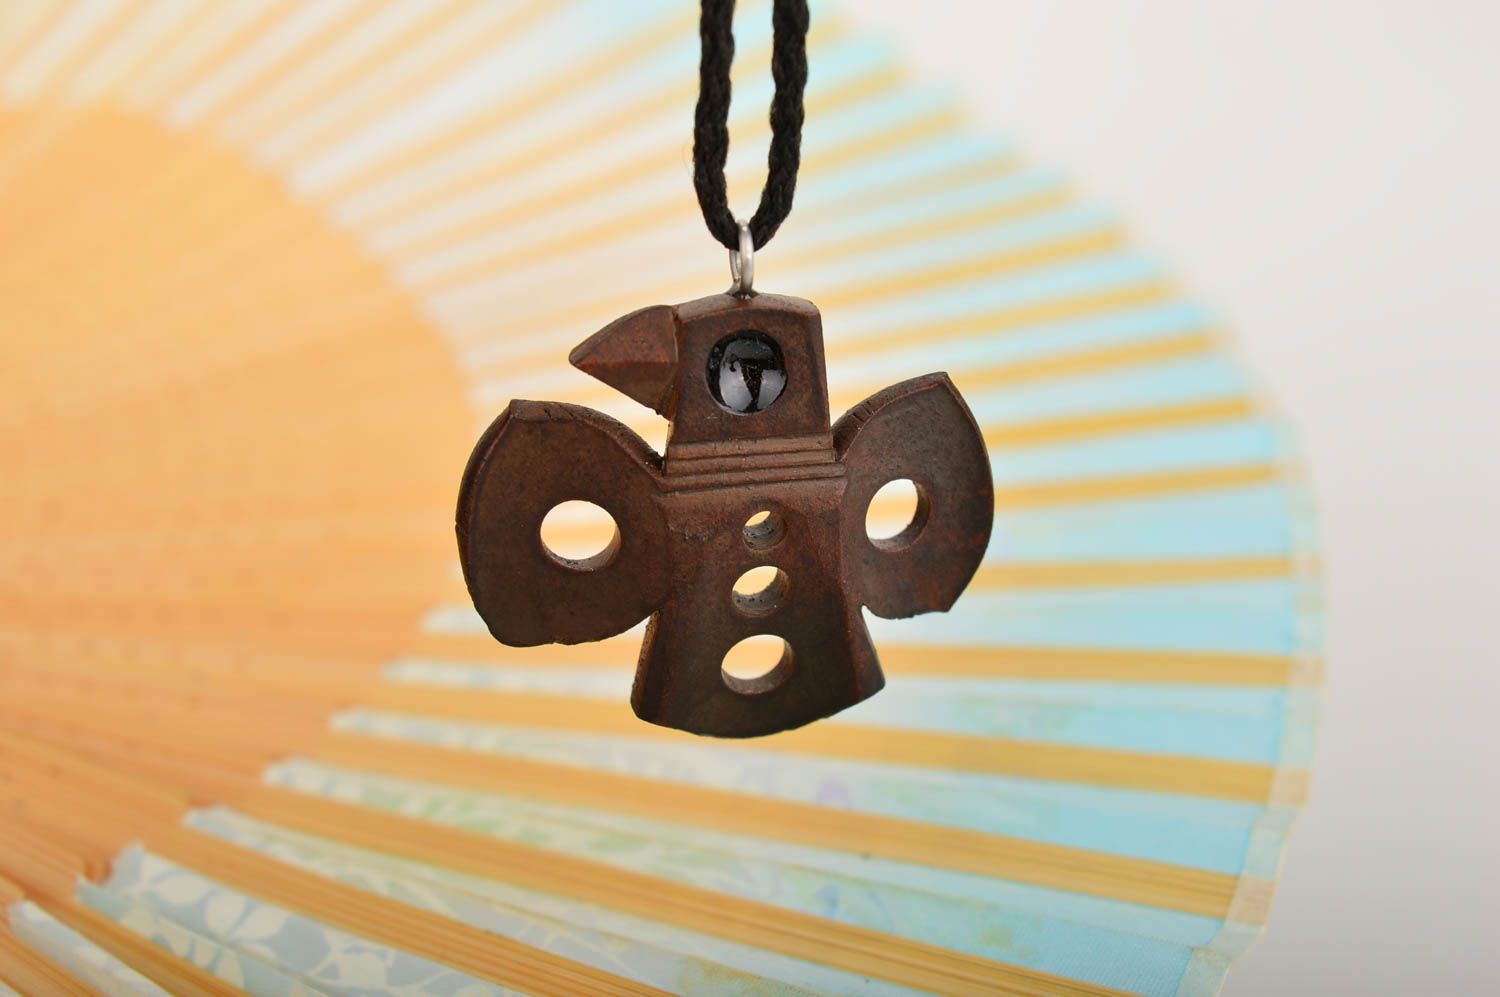 Handmade pendant designer pendant clay jewelry unusual accessory gift ideas photo 1